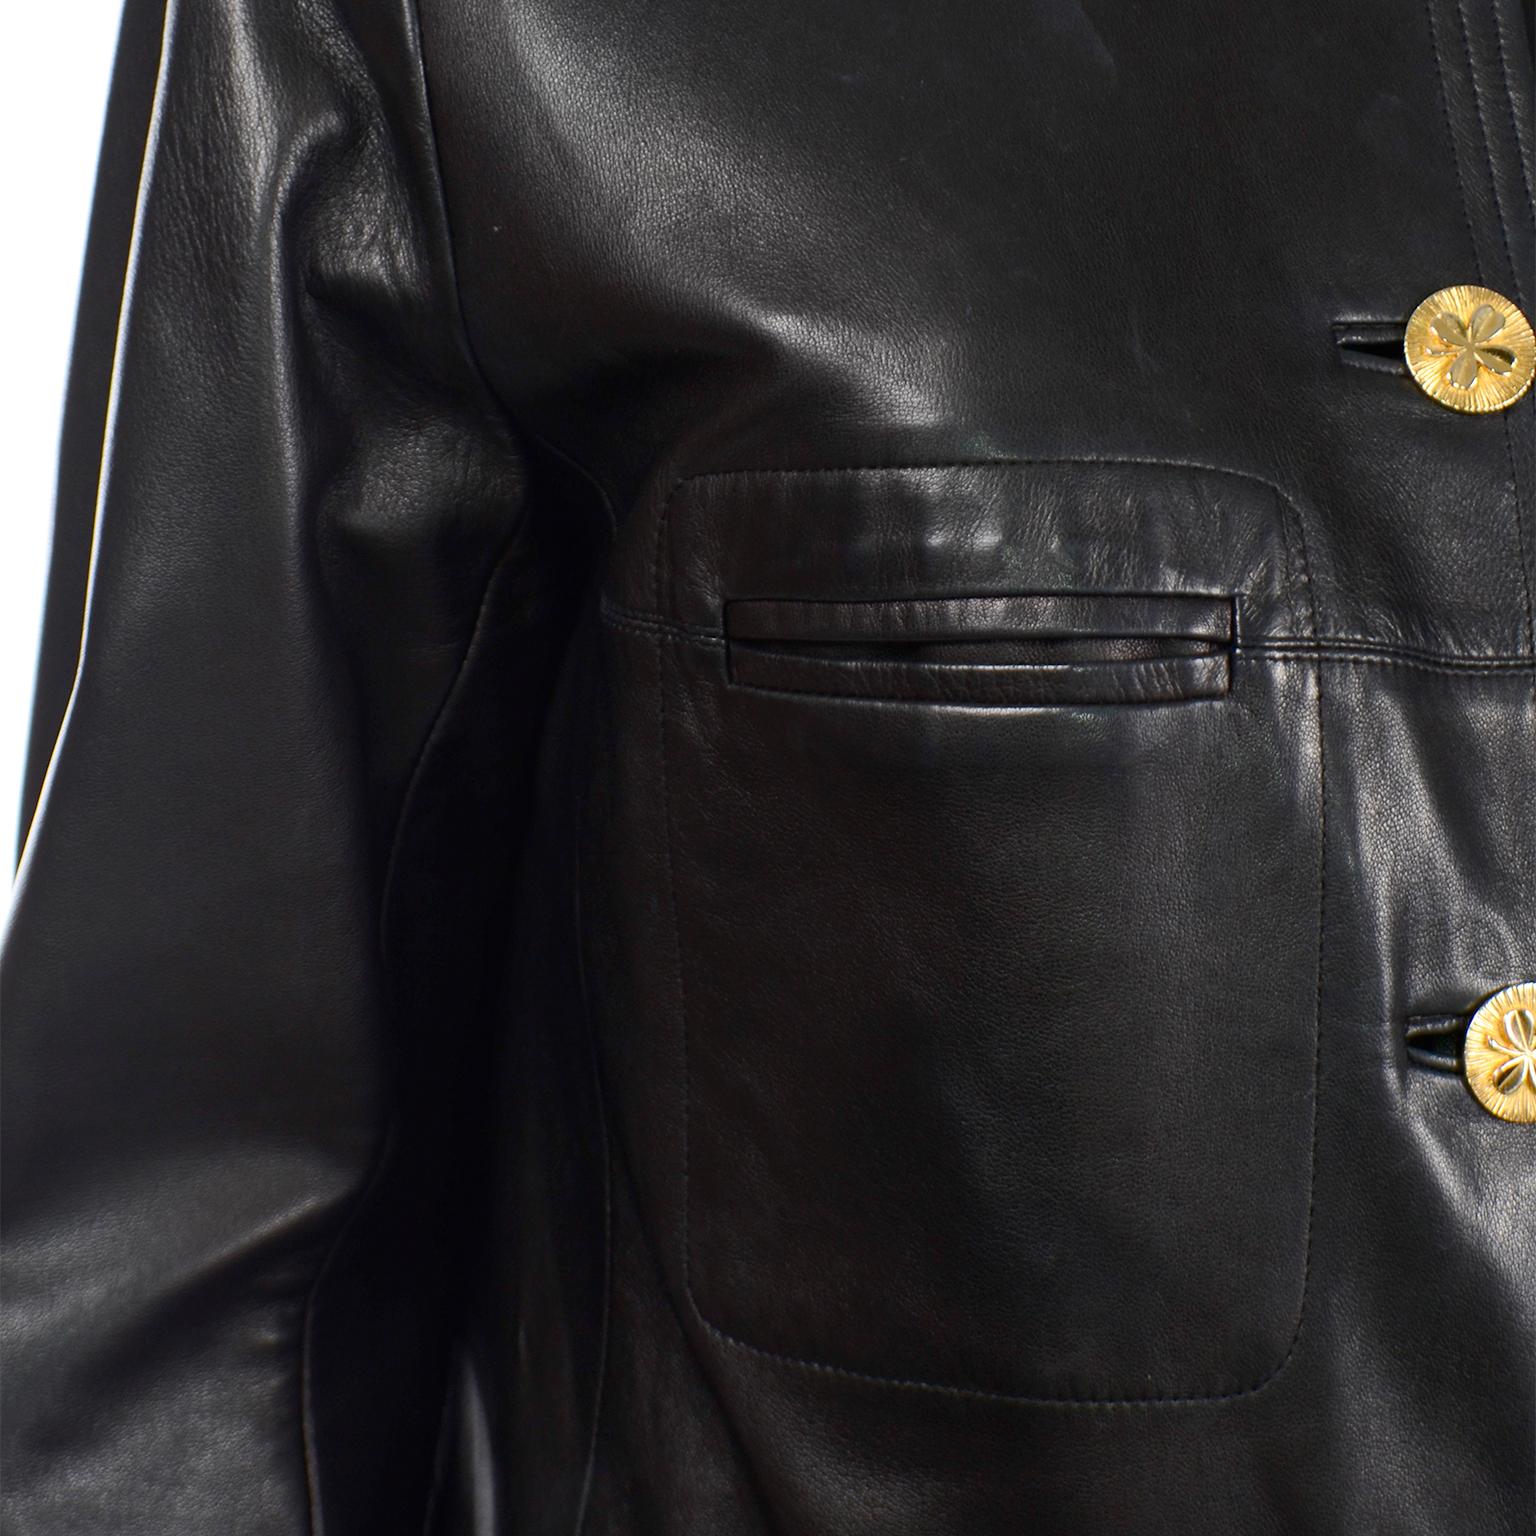 Chanel Vintage Black Leather Jacket with 4 Leaf Clover Gold Buttons 4